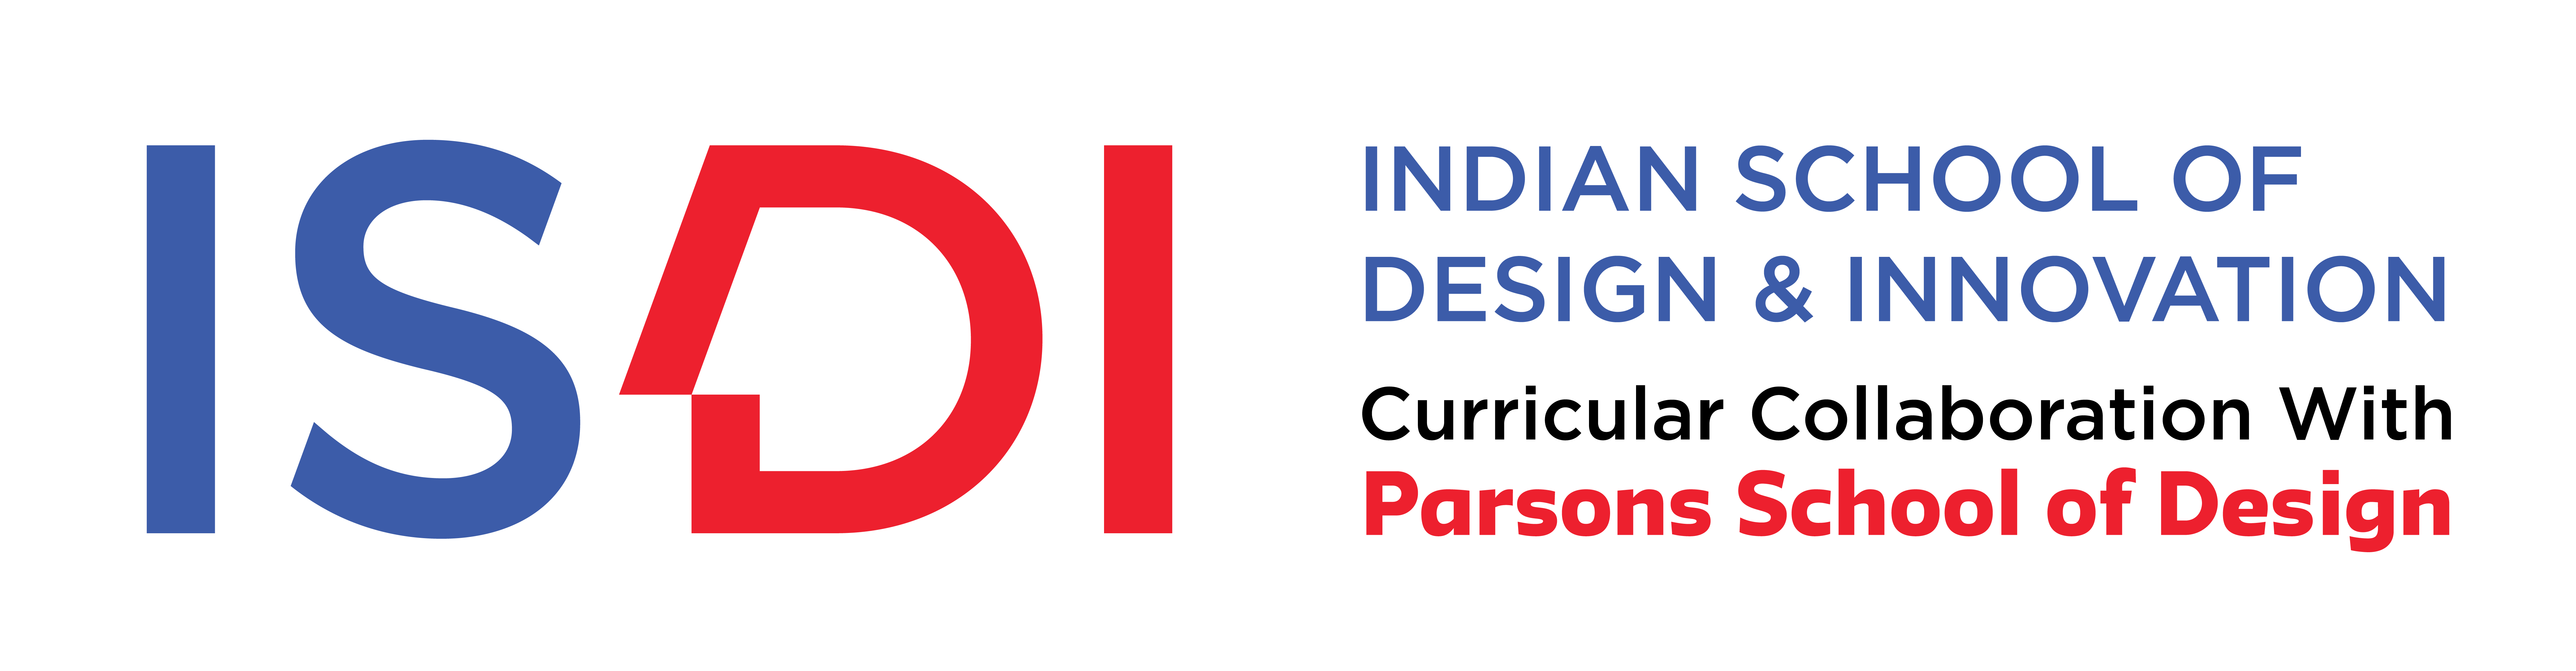 Indian School of Design & Innovation (ISDI)  Logo